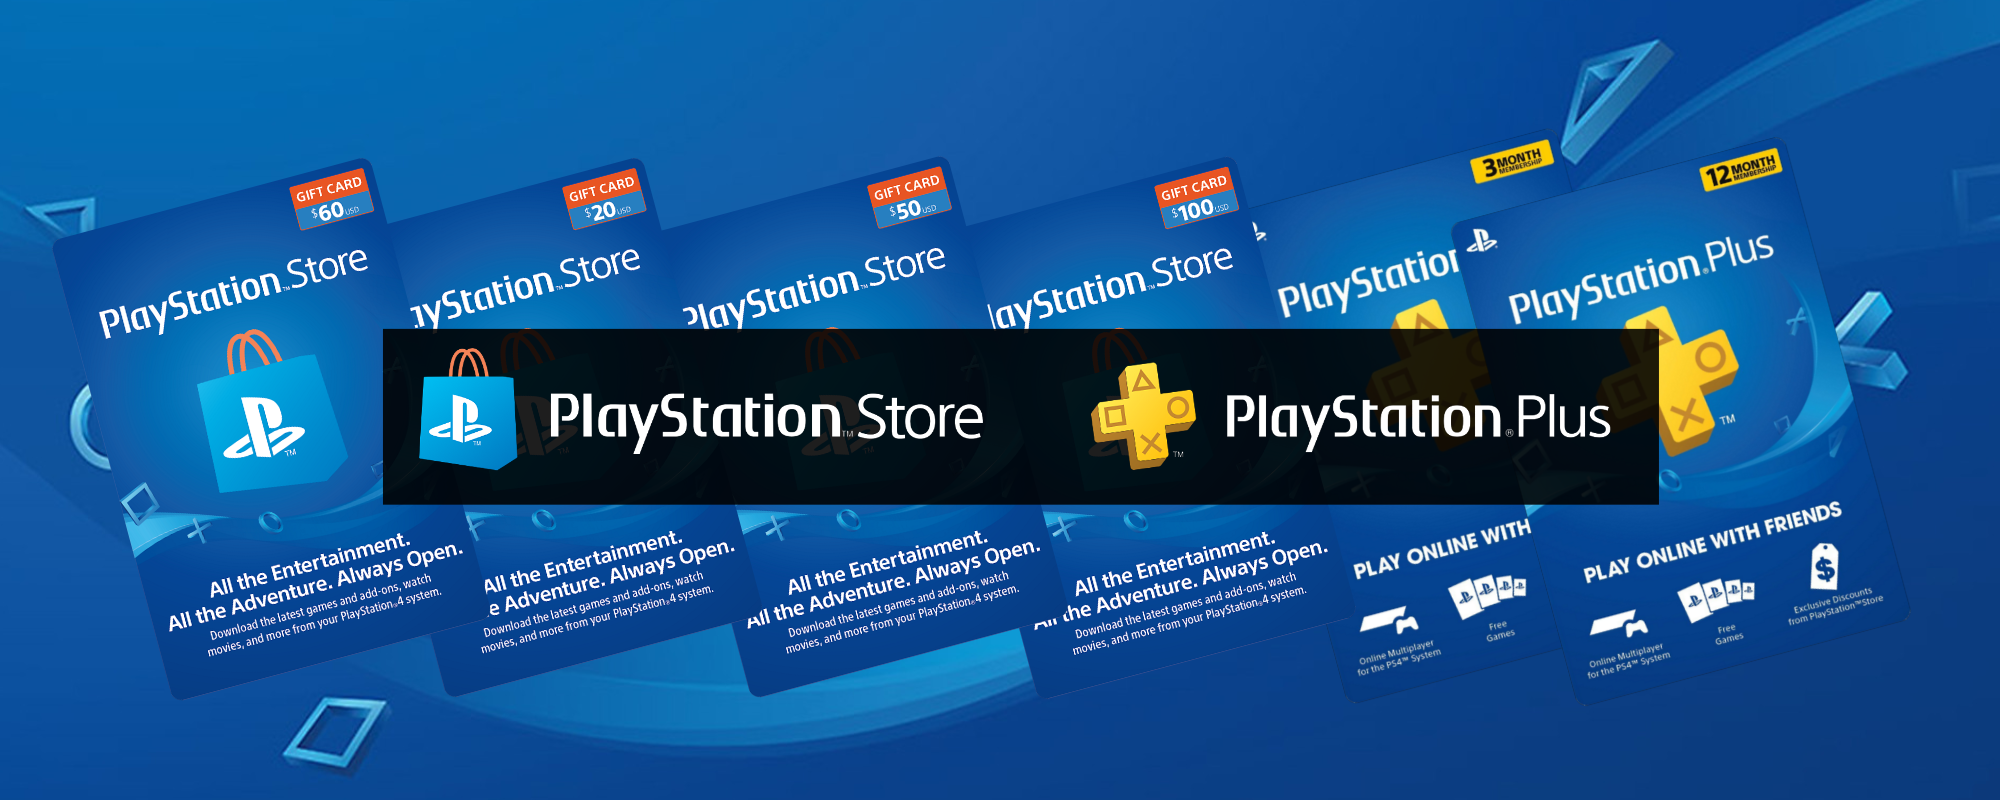 Todocodigoscl Giftcards Playstation Psn Plus Eshop - pagina web para conseguir robux mediantre points robux